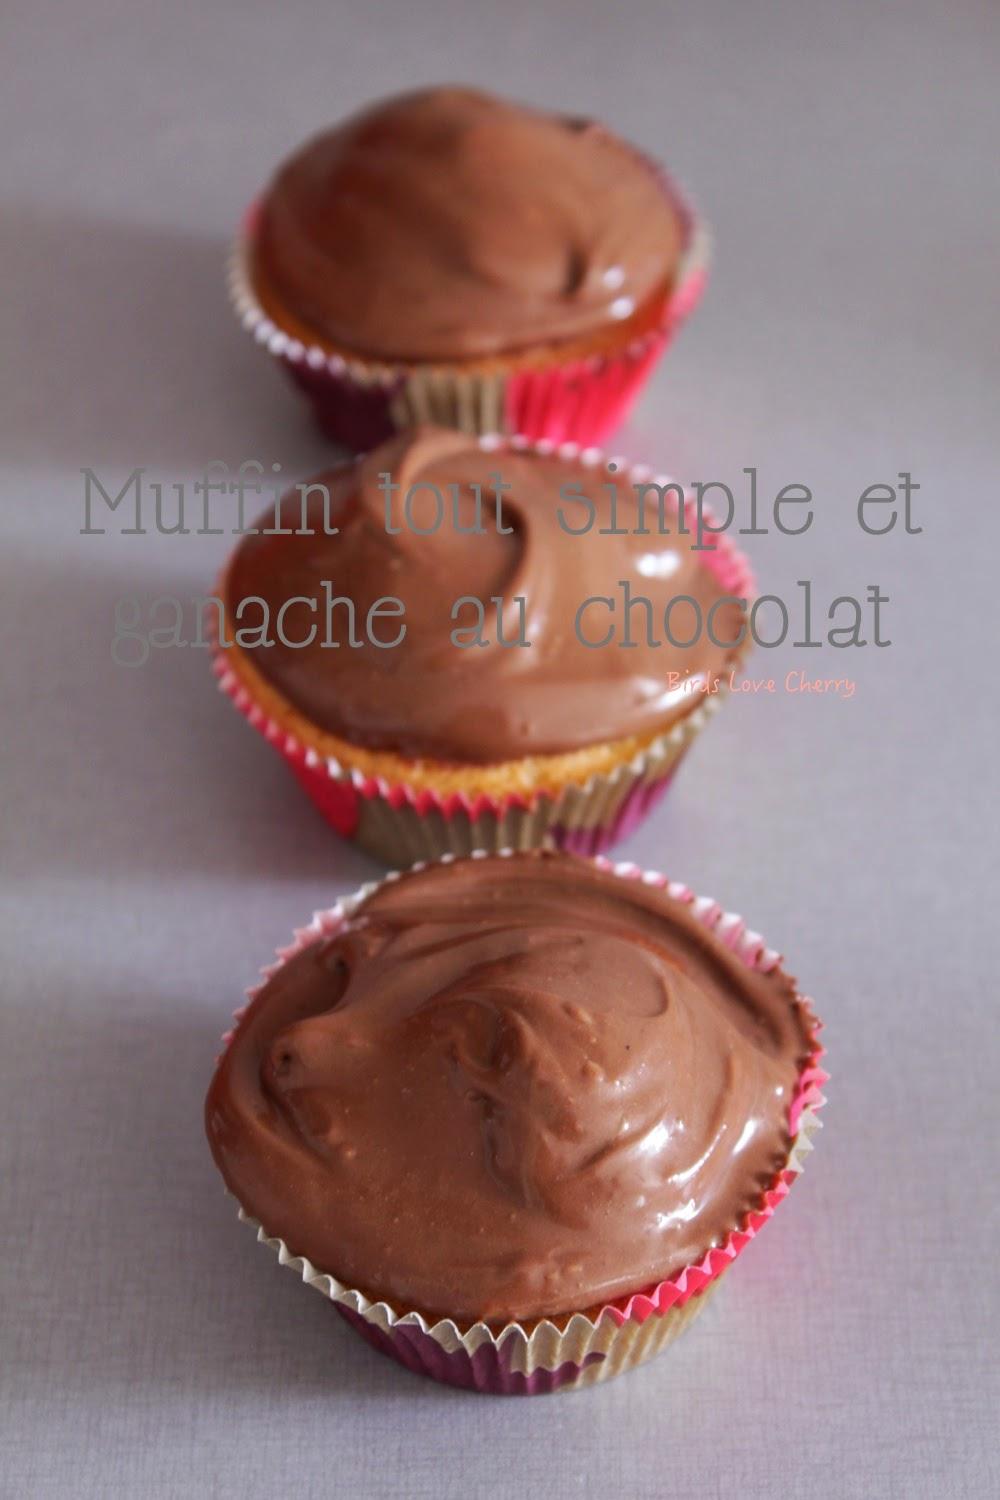 Muffin tout simple et sa ganache au chocolat à tomber!